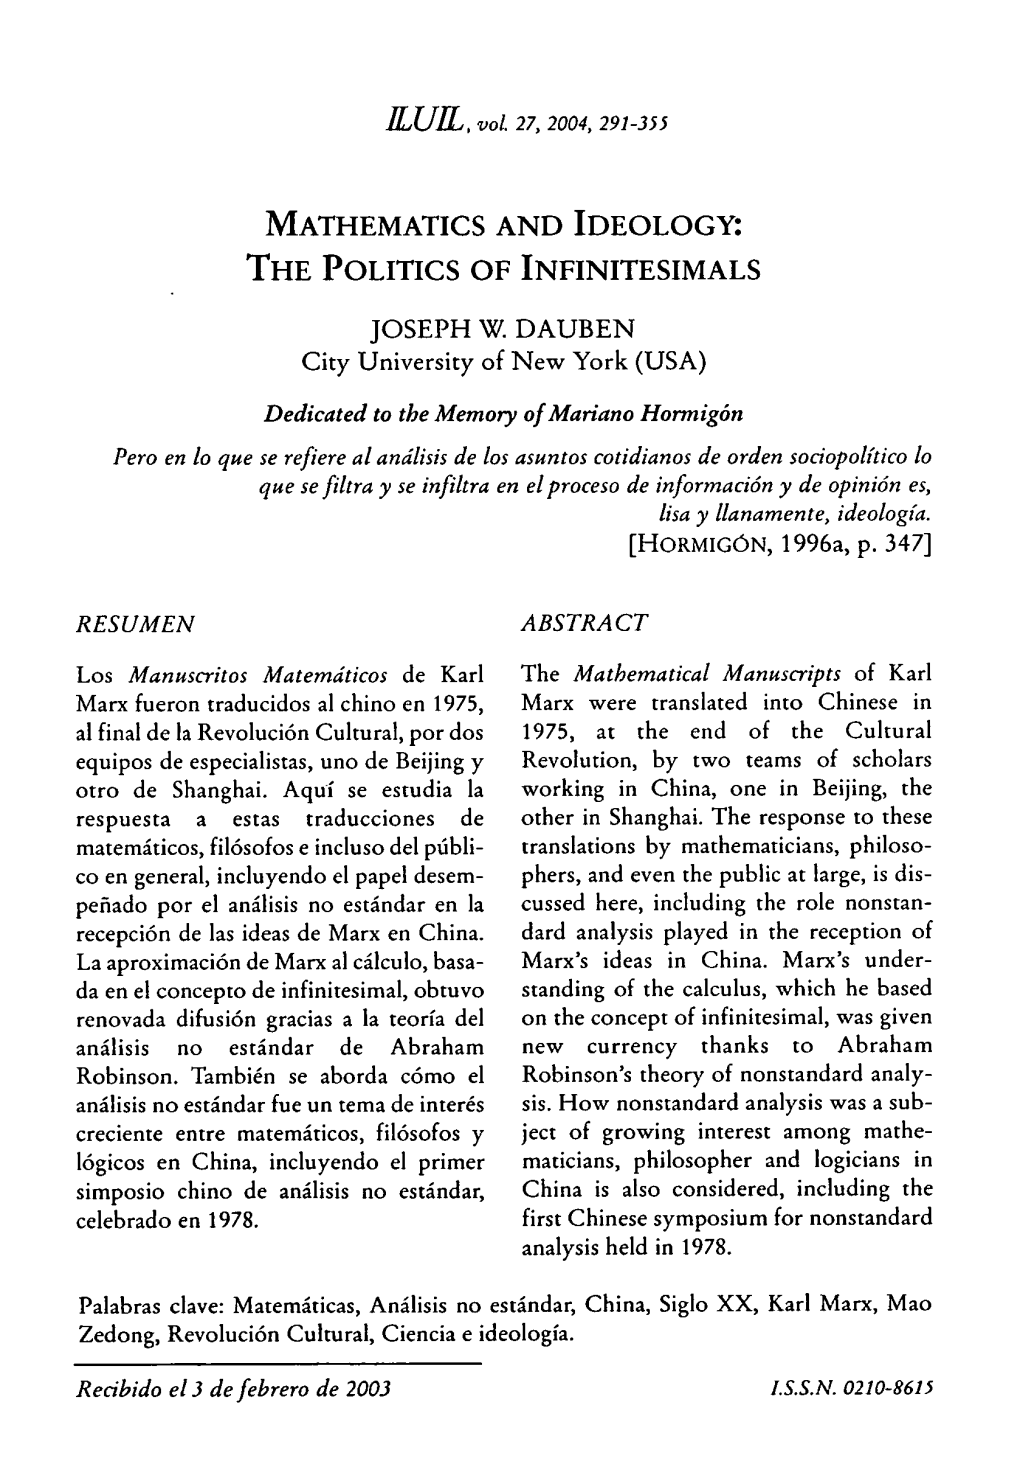 Mathematics and Ideology: the Politics of Infinitesimals